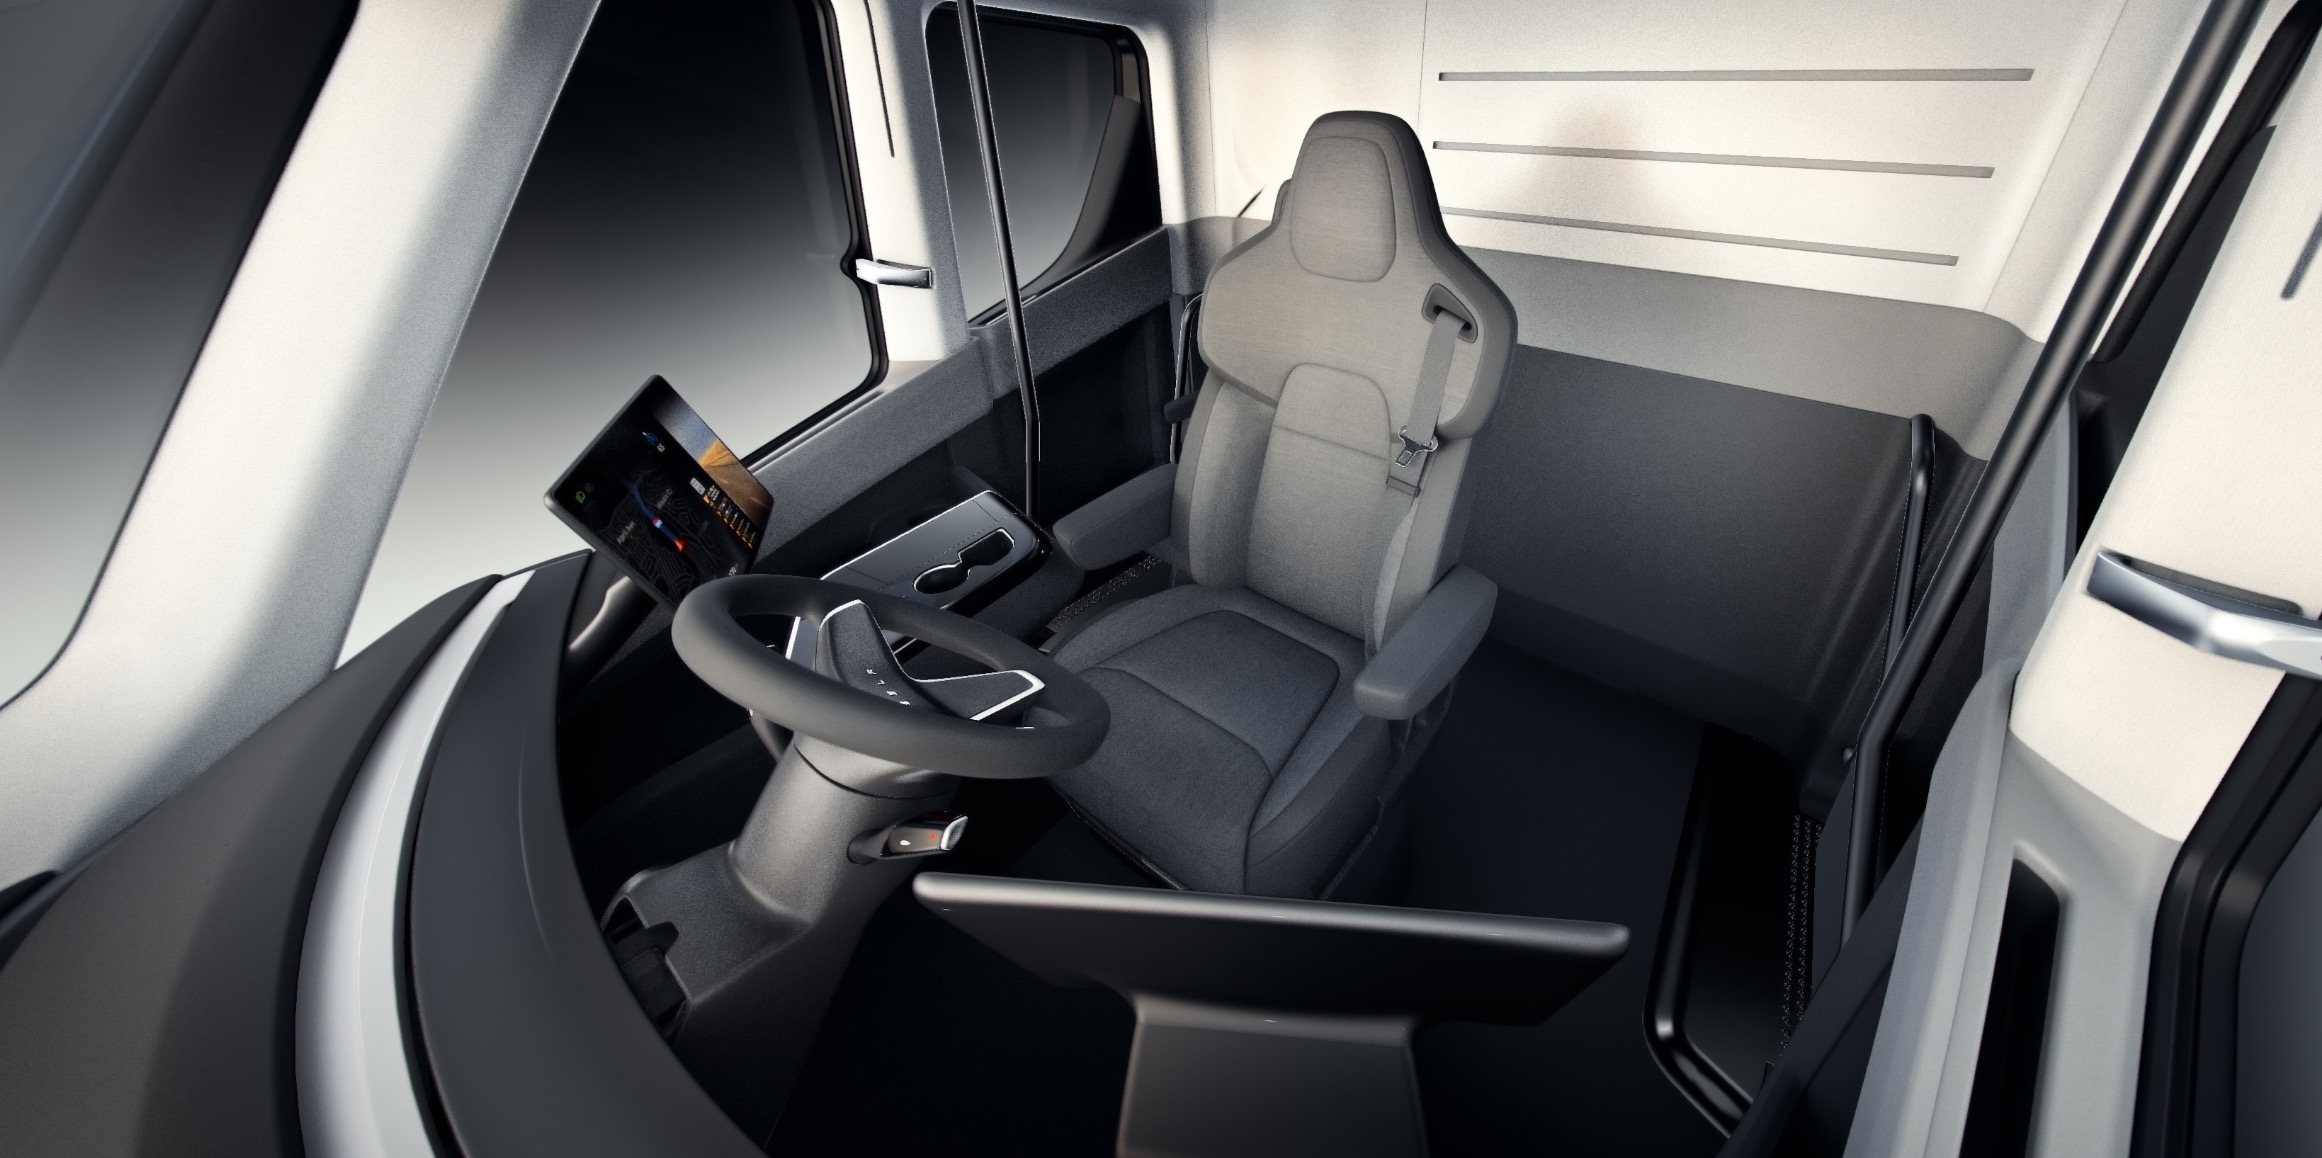 https://electrek.co/wp-content/uploads/sites/3/2019/11/Tesla-Semi-interior-seat.jpg?quality=82&strip=all